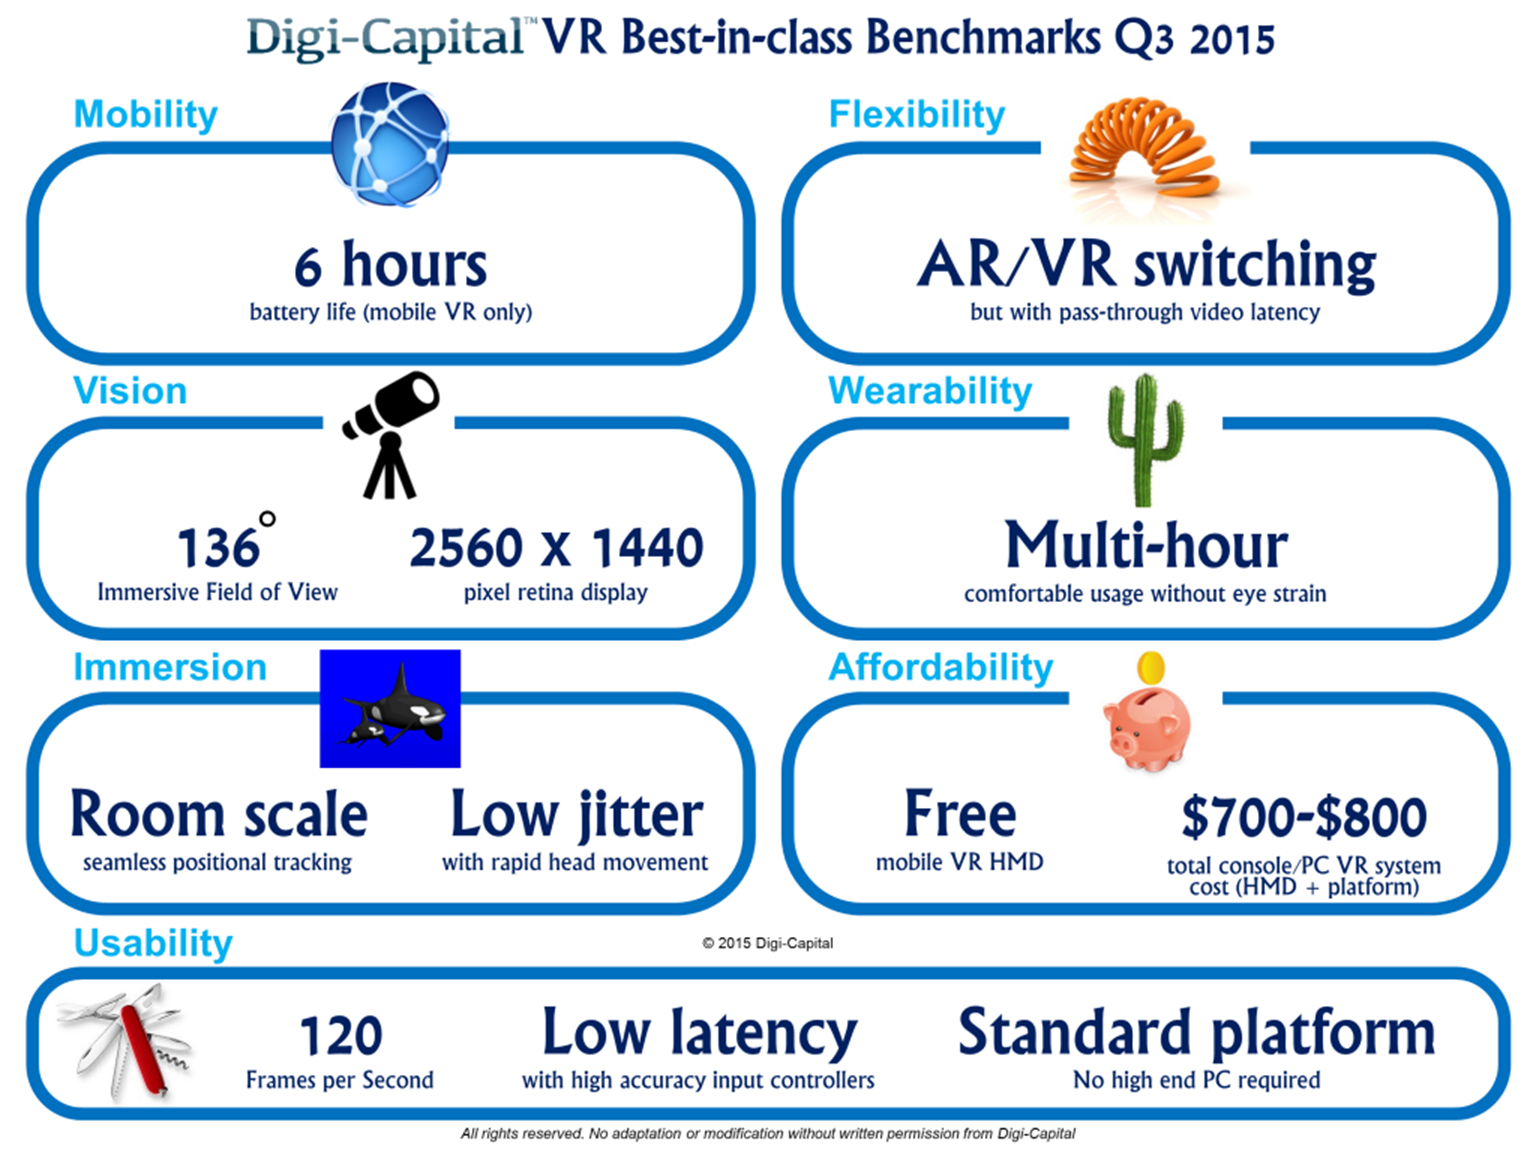 Digi-Capital VR best-in-class benchmarks